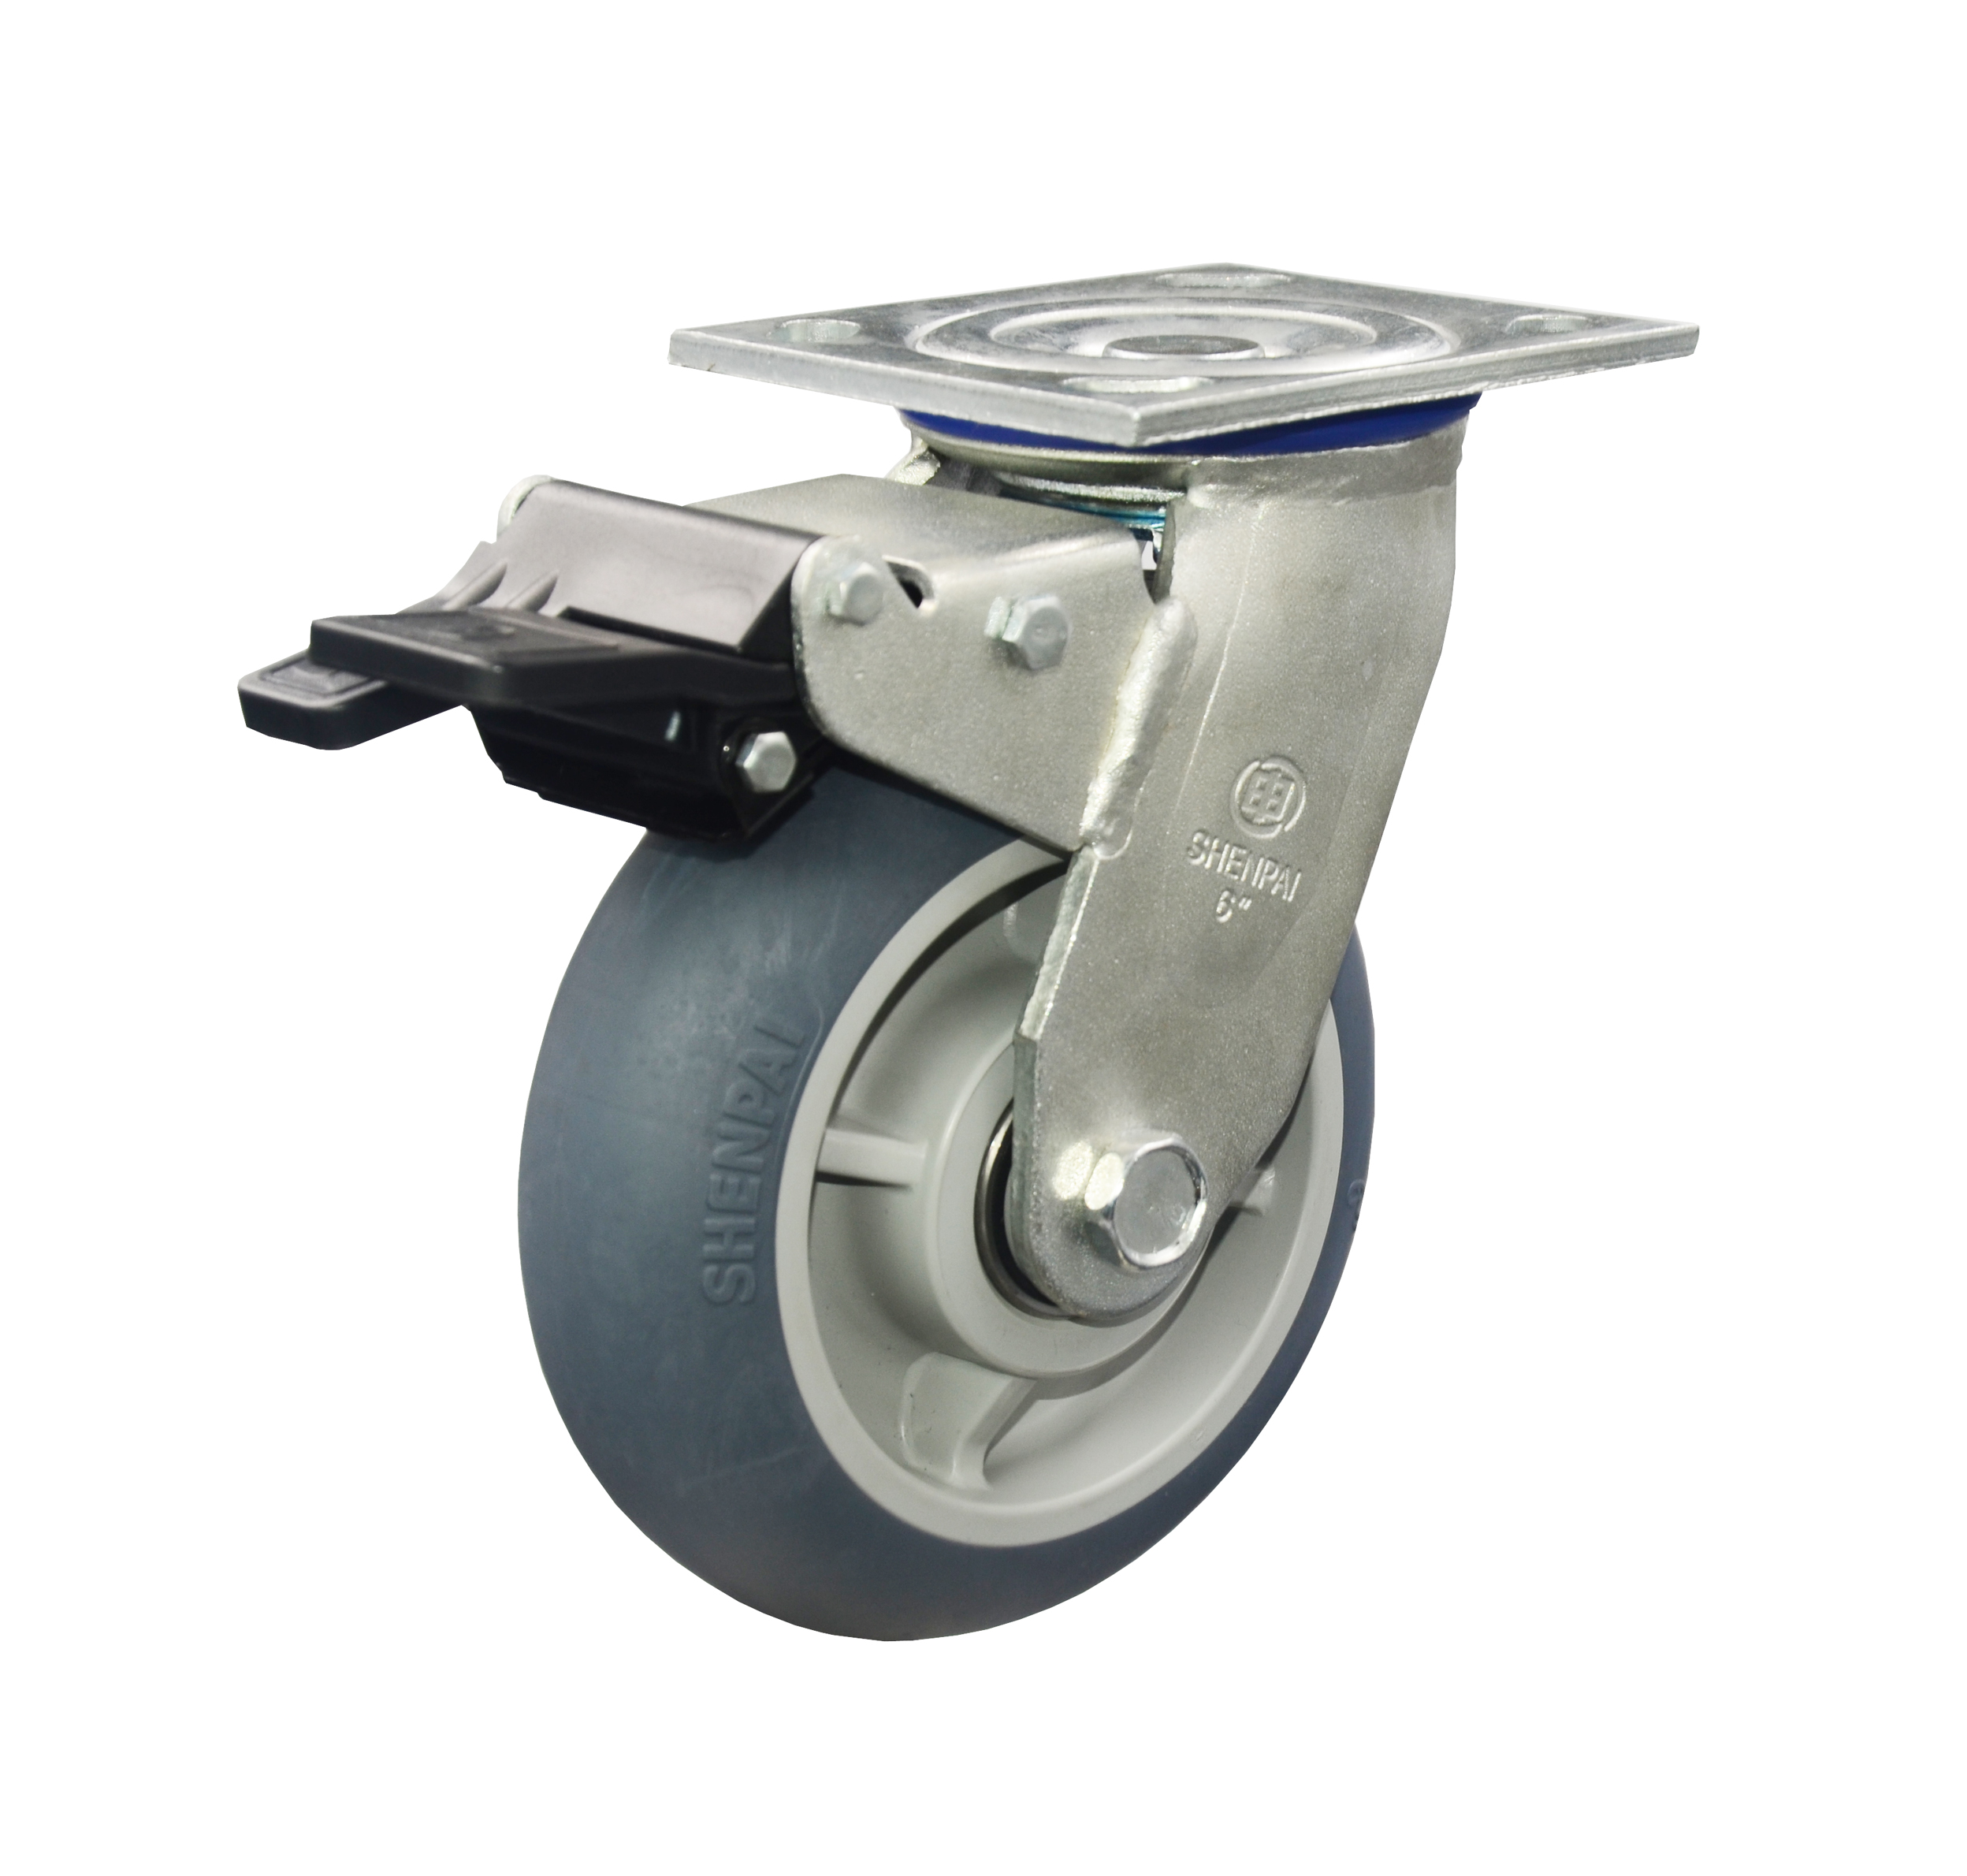 TPR Swivel with brake Caster Wheel for Heavy Duty 4"